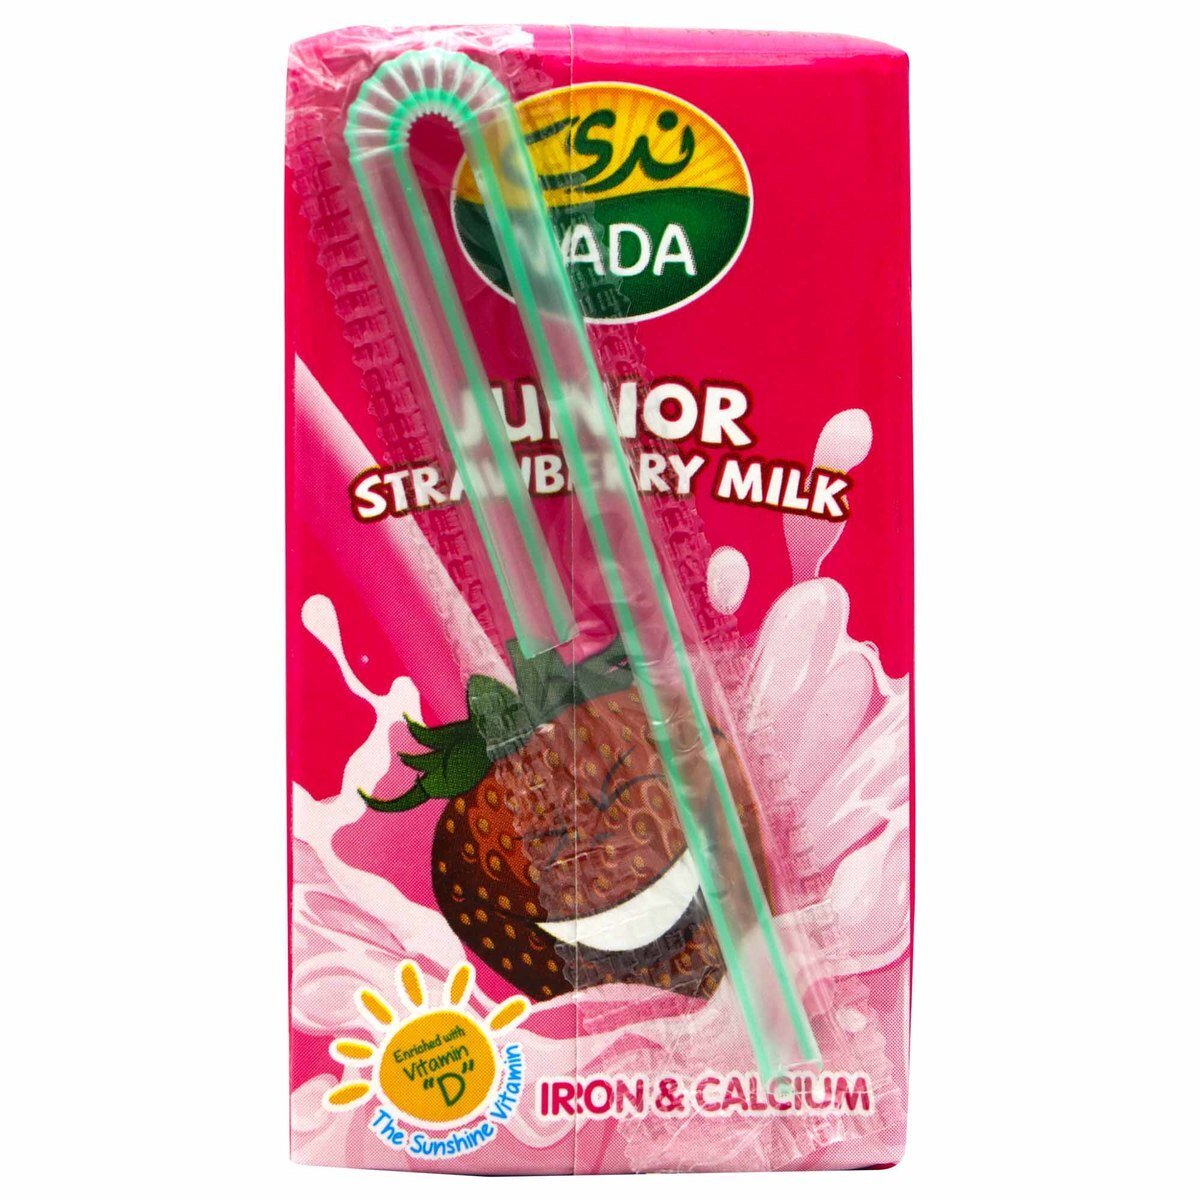 Nada Junior Strawberry Milk 18 x 115 ml